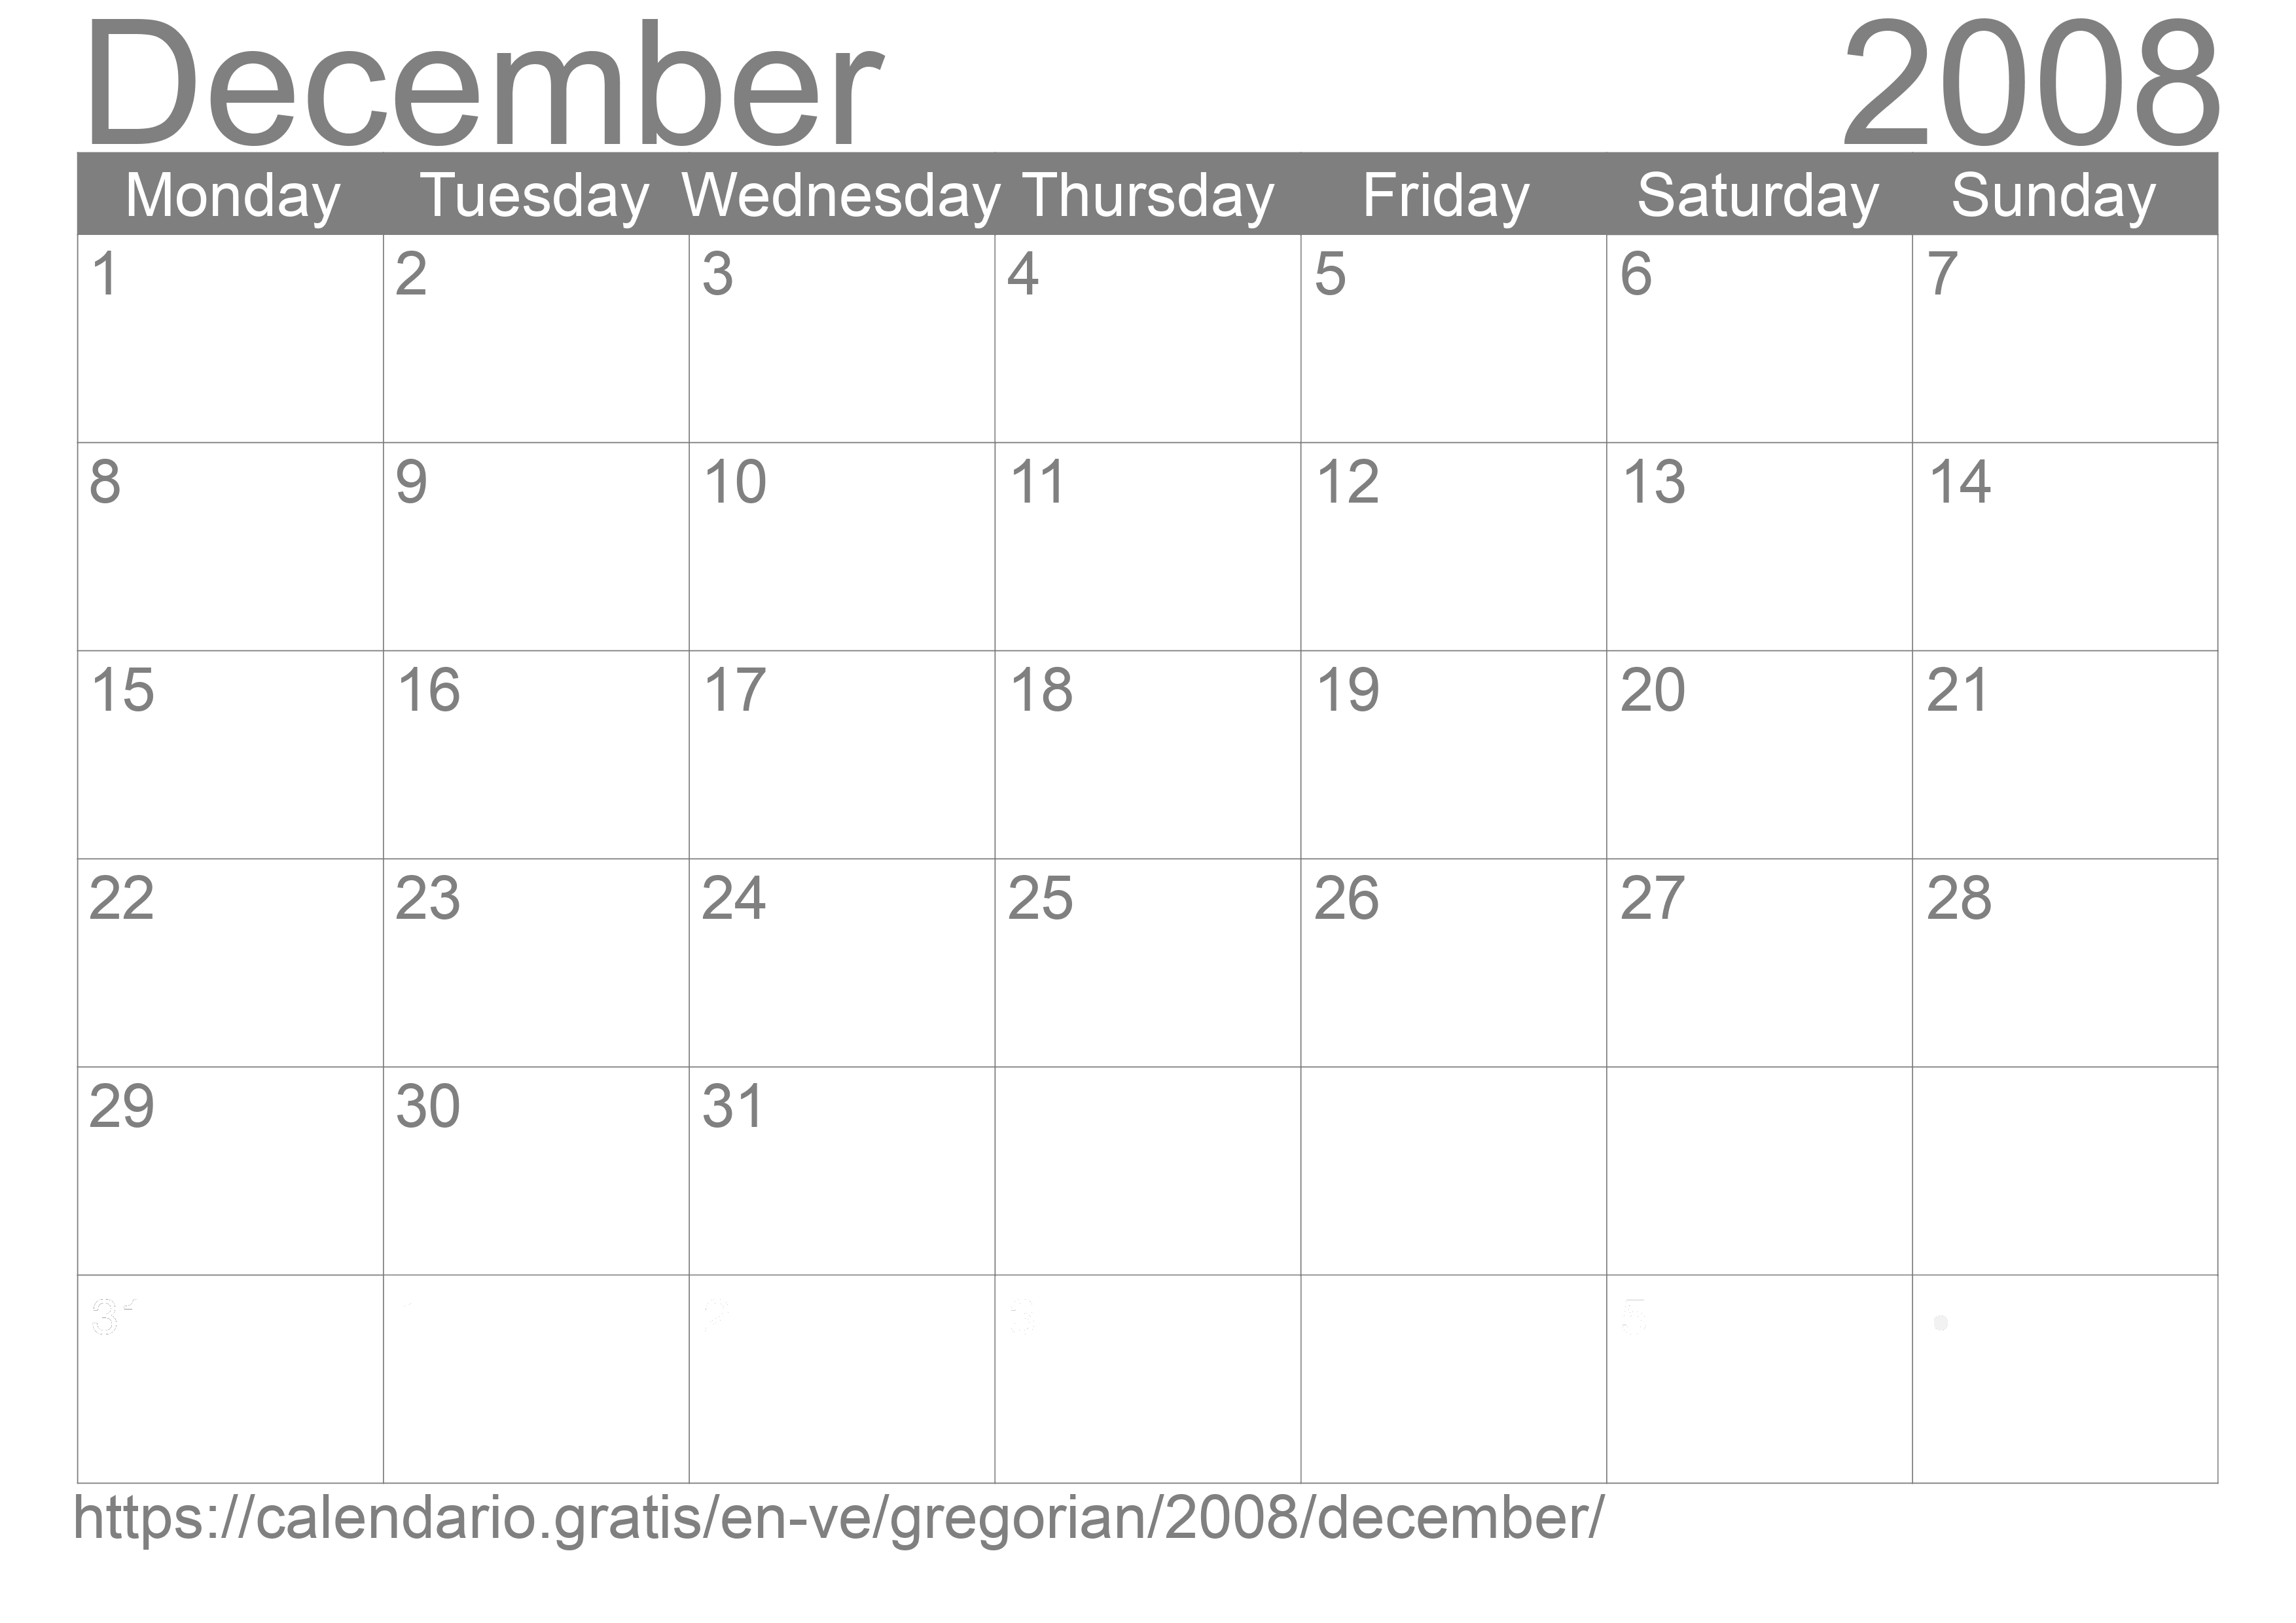 Calendar December 2008 to print